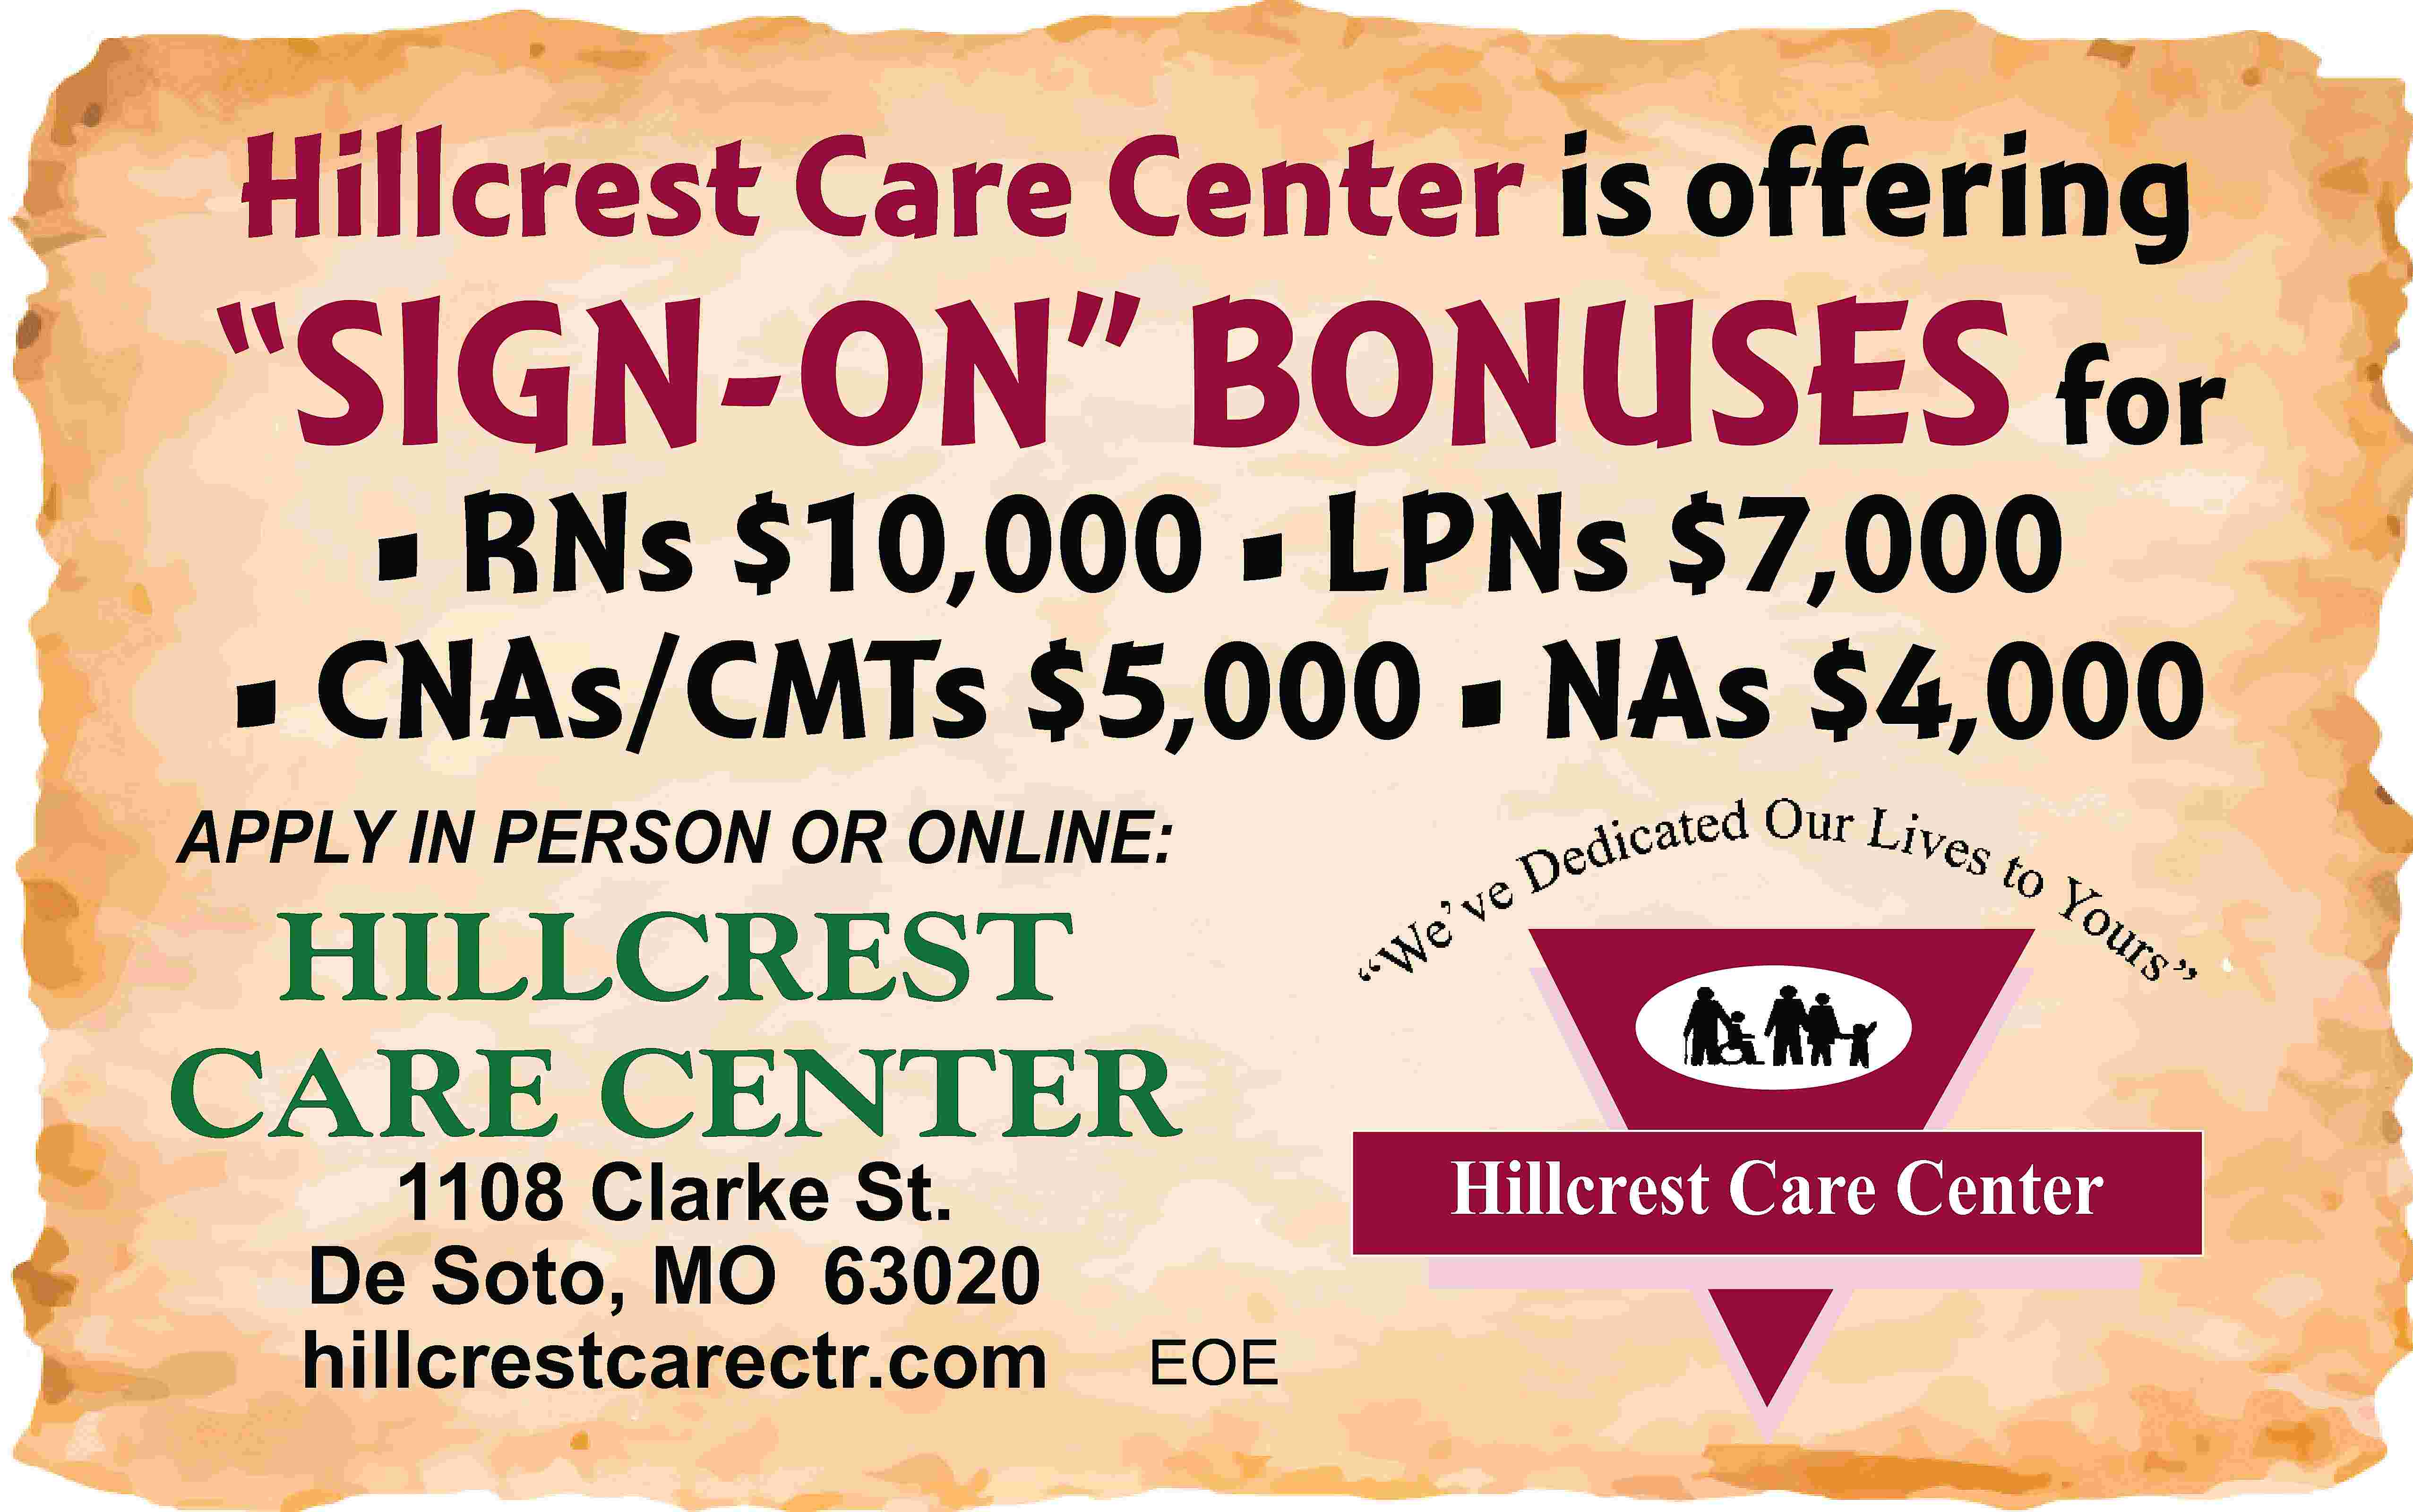 Hillcrest Care Center is offering  Hillcrest Care Center is offering “SIGN-ON” BONUSES for • RNs $10,000 • LPNs $7,000 • CNAs/CMTs $5,000 • NAs $4,000 APPLY IN PERSON OR ONLINE: HILLCREST CARE CENTER 1108 Clarke St. De Soto, MO 63020 hillcrestcarectr.com EOE Hillcrest Care Center